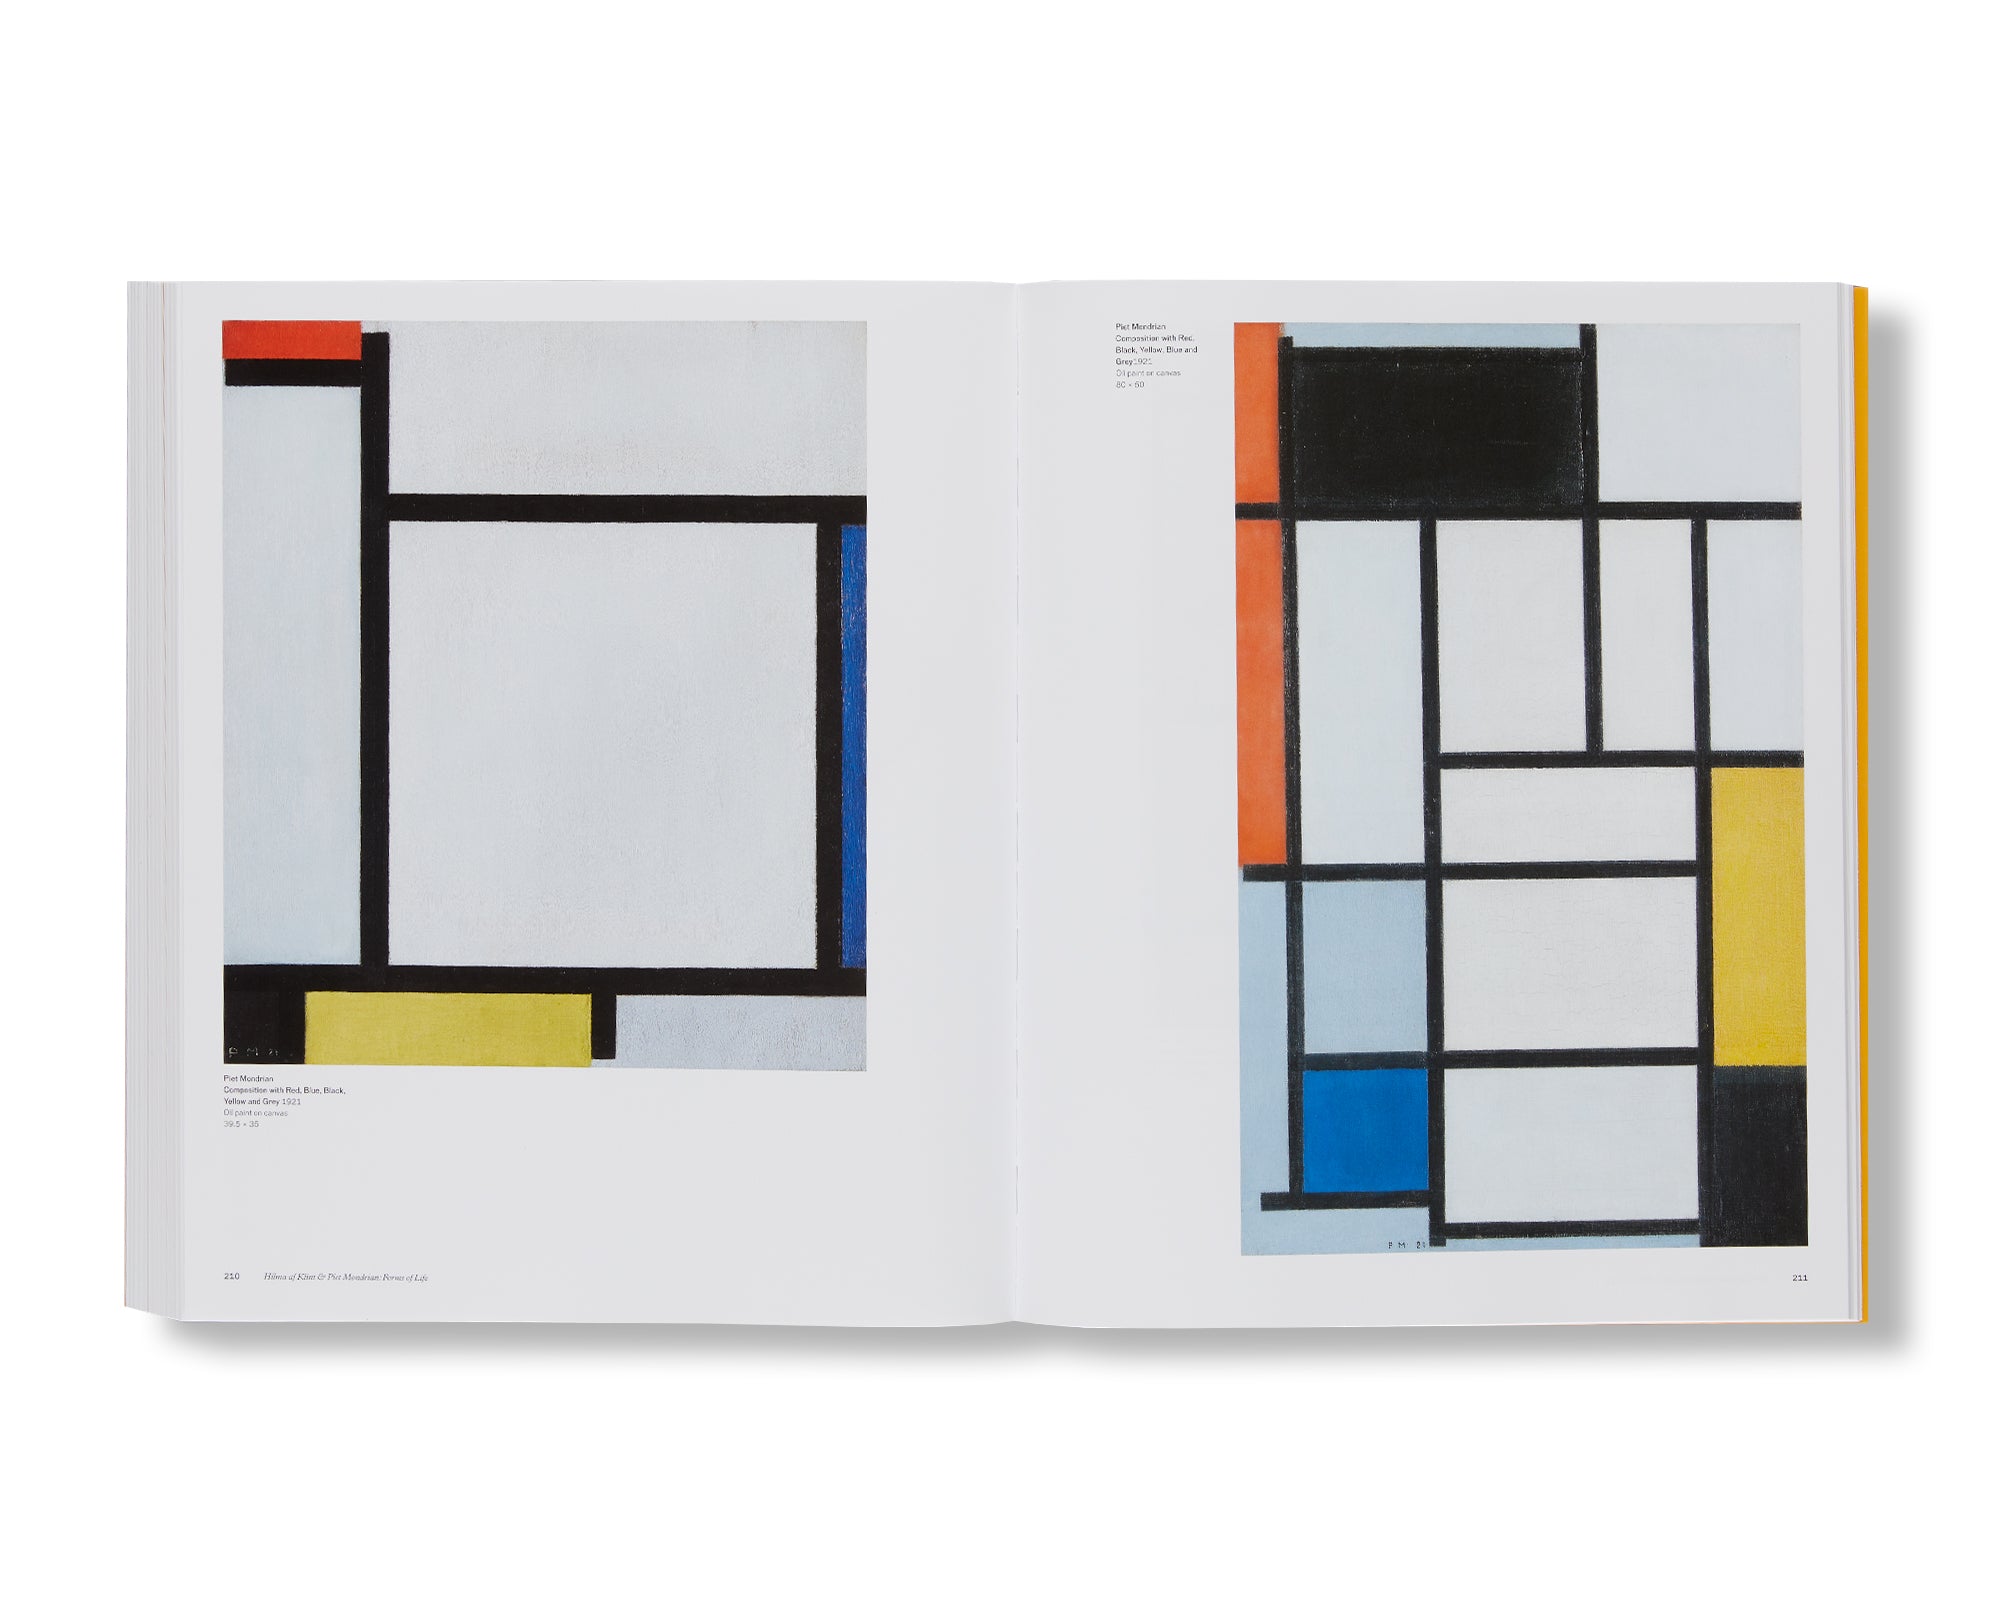 HILMA AF KLINT AND PIET MONDRIAN: FORMS OF LIFE by Hilma af Klint, Piet Mondrian [SOFTCOVER]